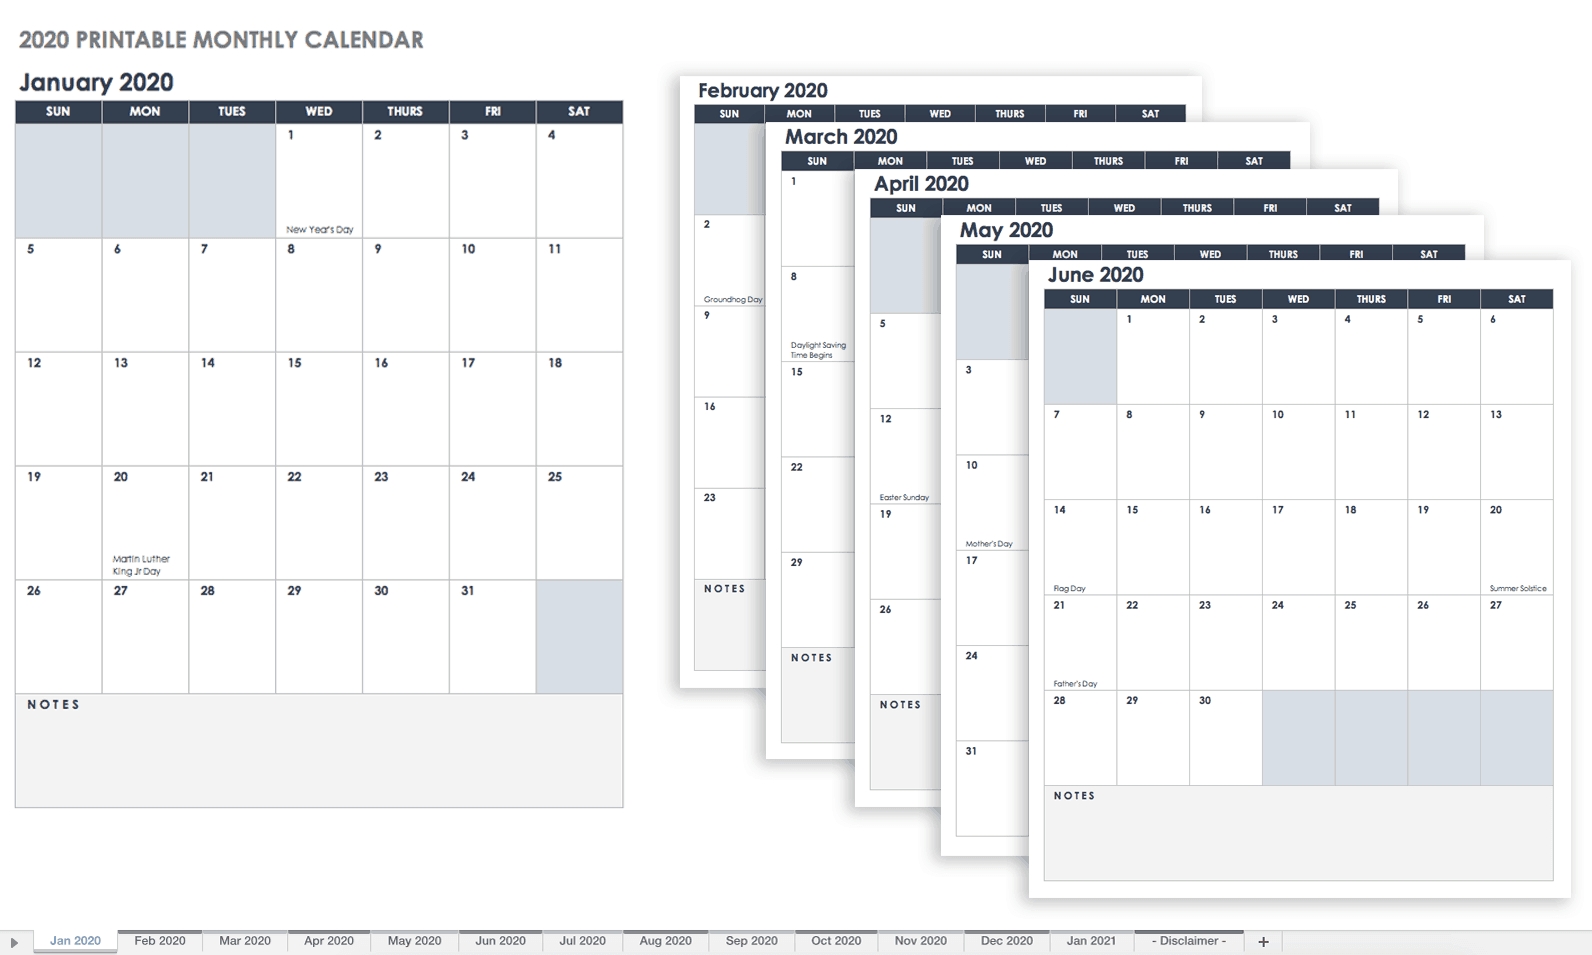 incredible-5x7-calendar-templates-free-printable-printable-blank-calendar-template